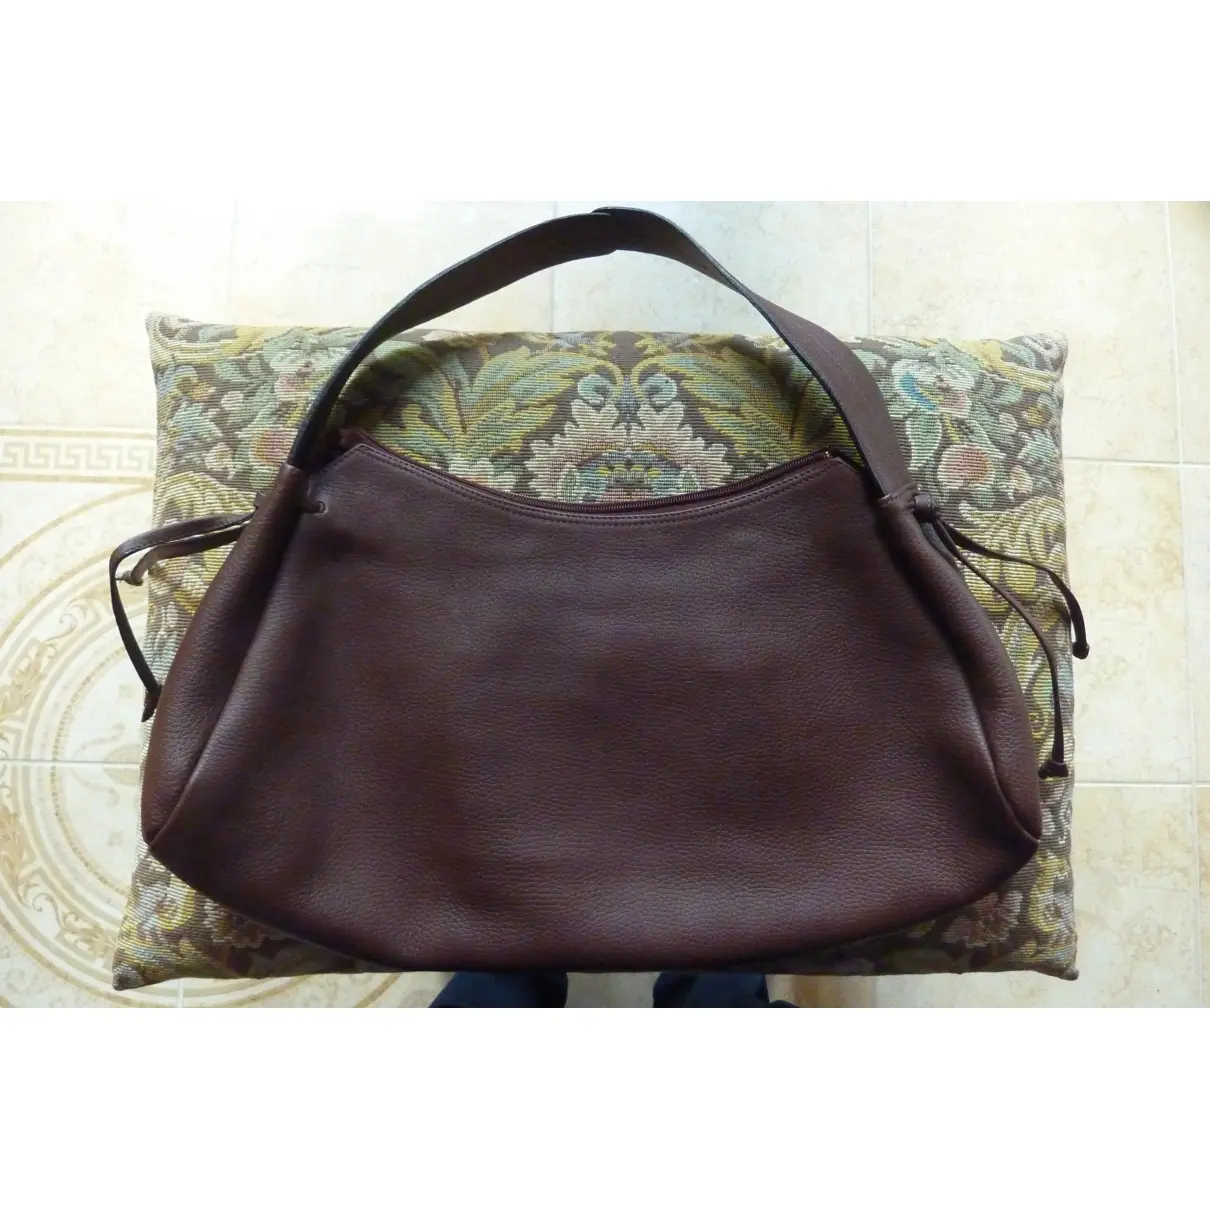 Buy Neuville Leather handbag online